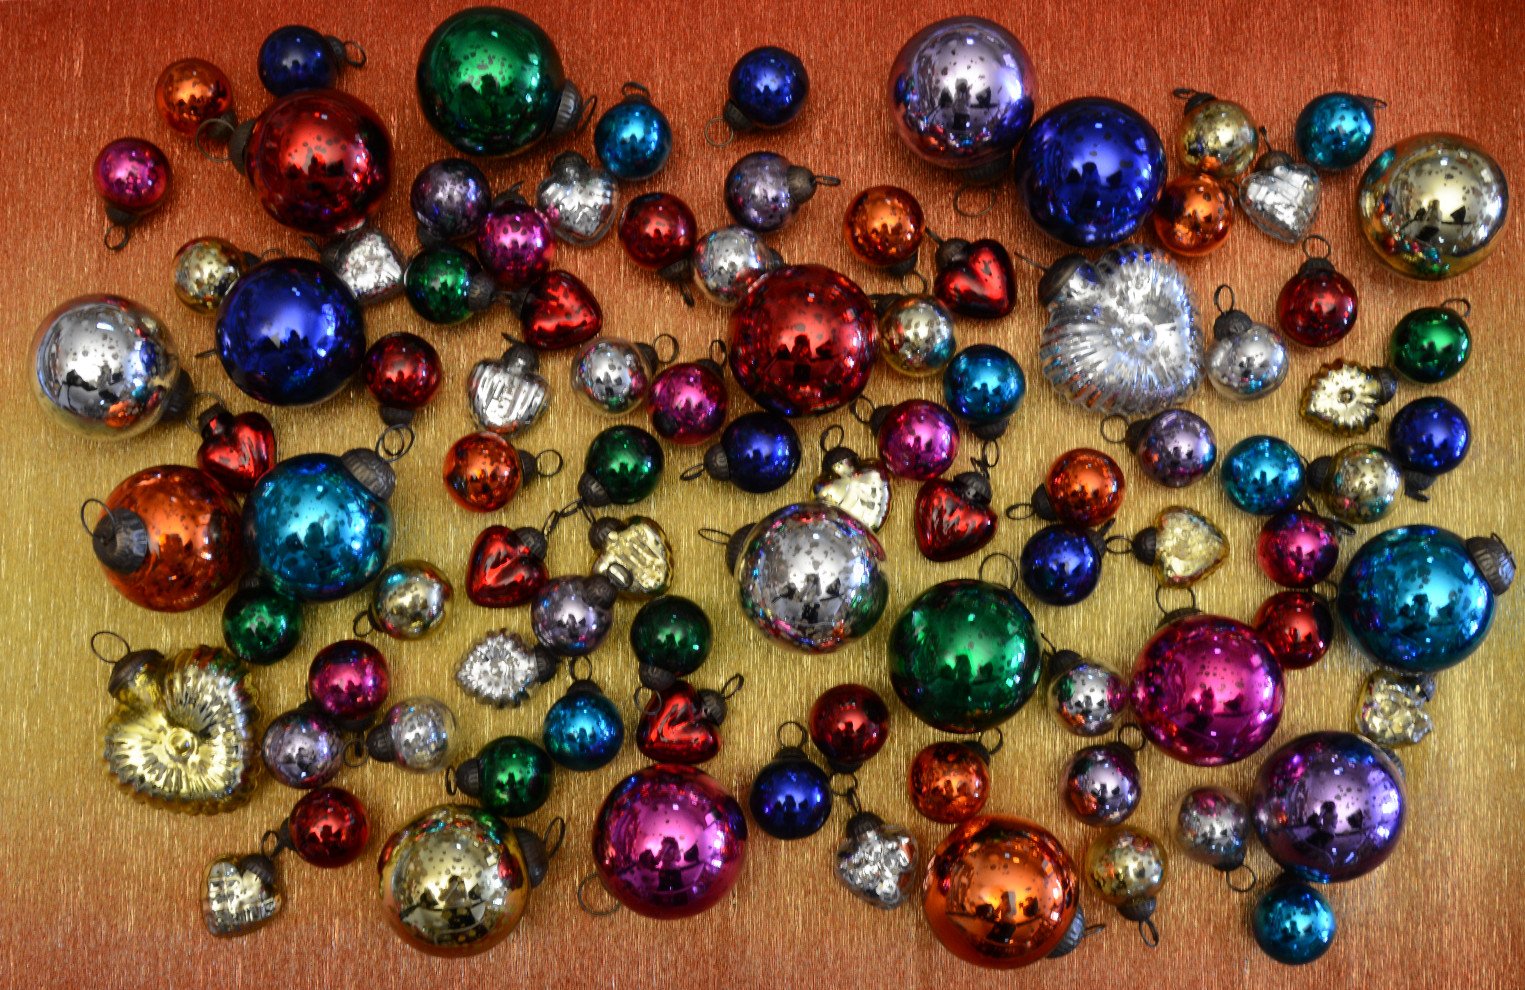 6 Pack | 1.5-Inch Dark Blue Ava Mini Mercury Handcrafted Glass Balls Ornaments Christmas Tree Decoration